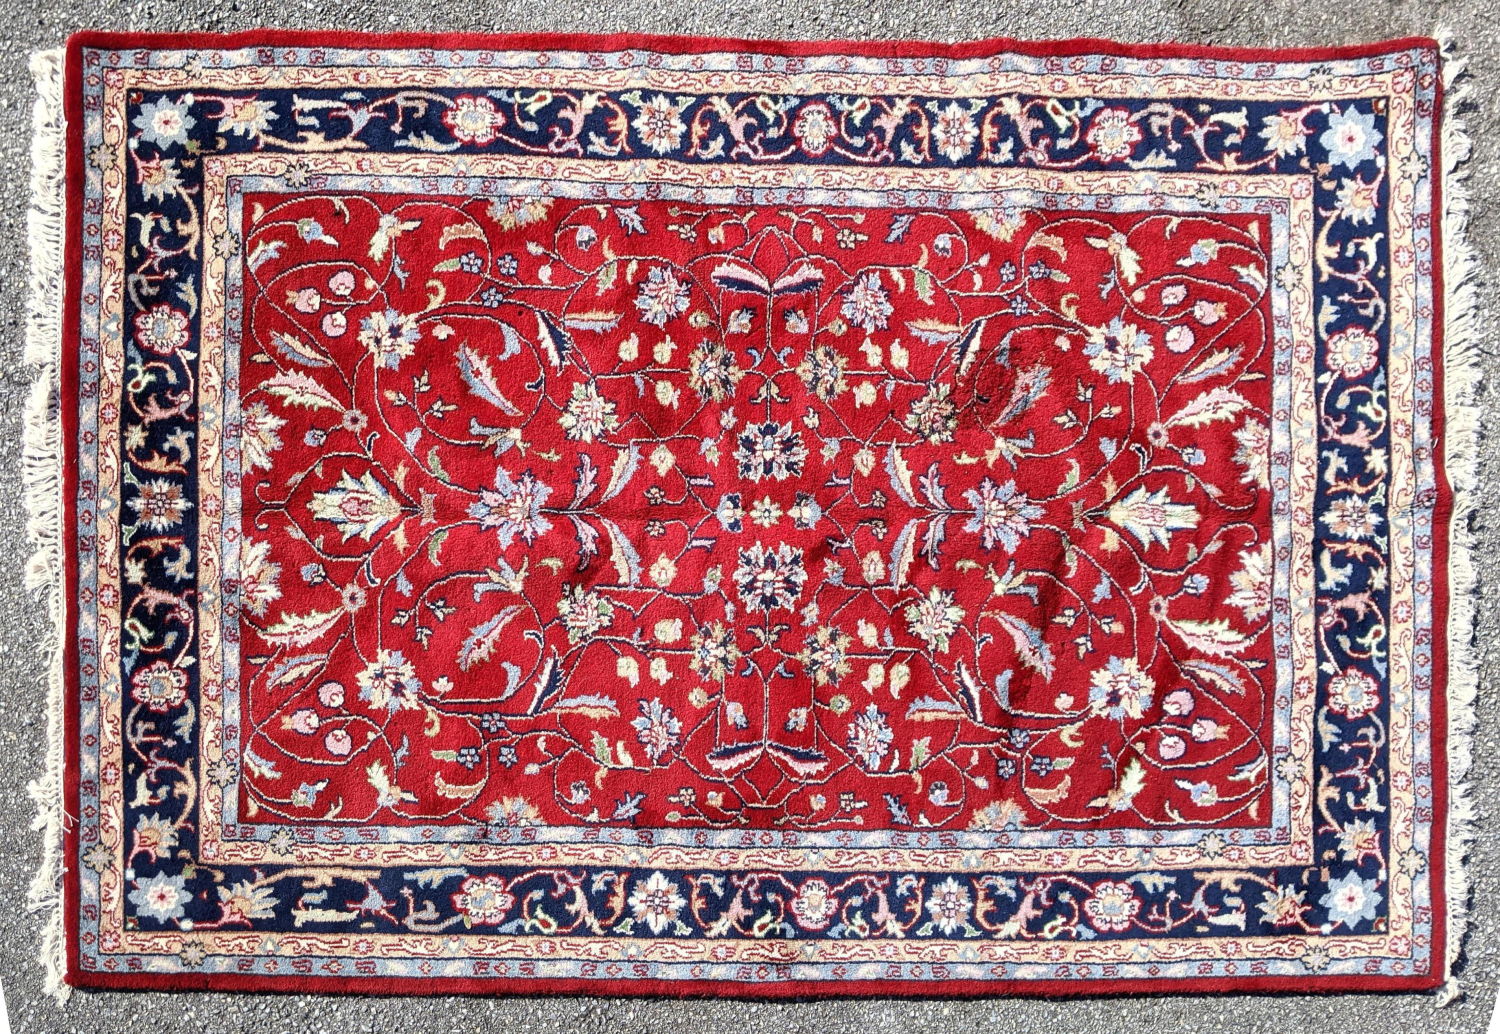 5'11x9' Red handmade carpet rug.